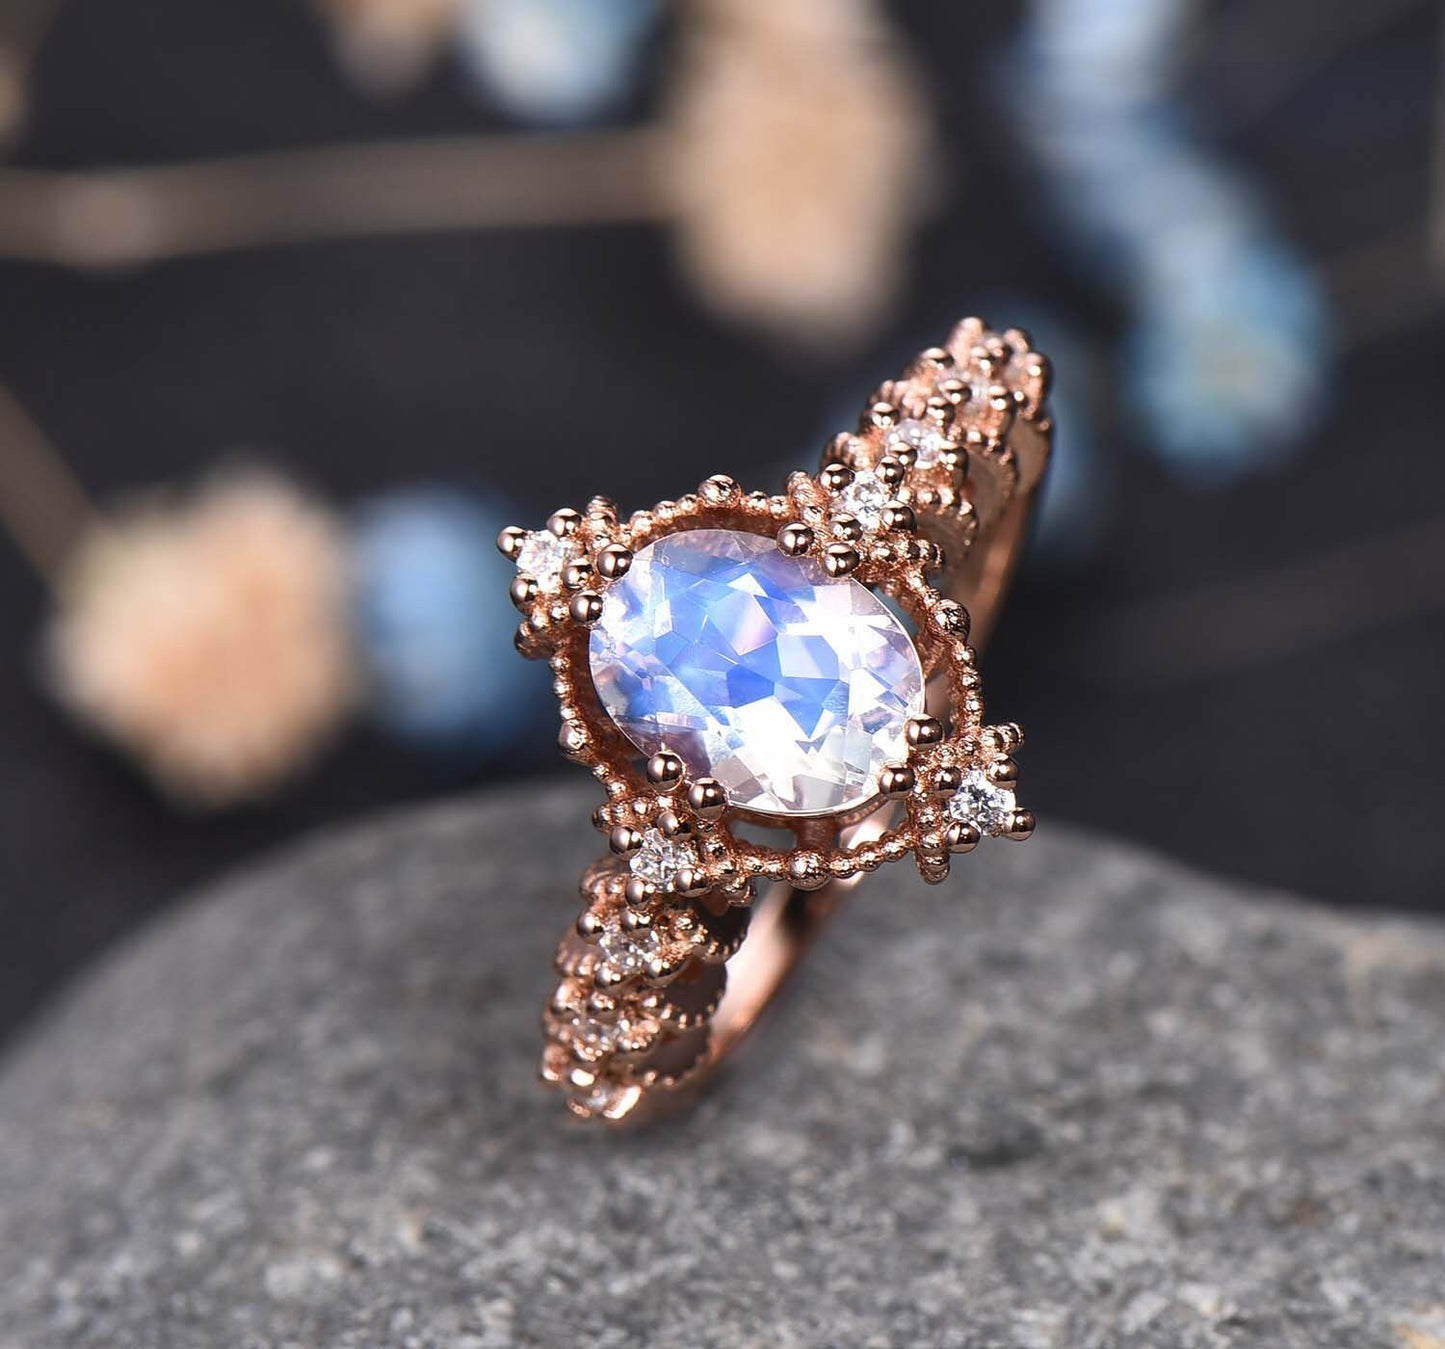 Vintage Moonstone Engagement Ring Rose Gold Diamond/Moissanite Wedding Ring 6x8mm Oval Cut Moonstone Halo Milgrain Ring June Birthstone